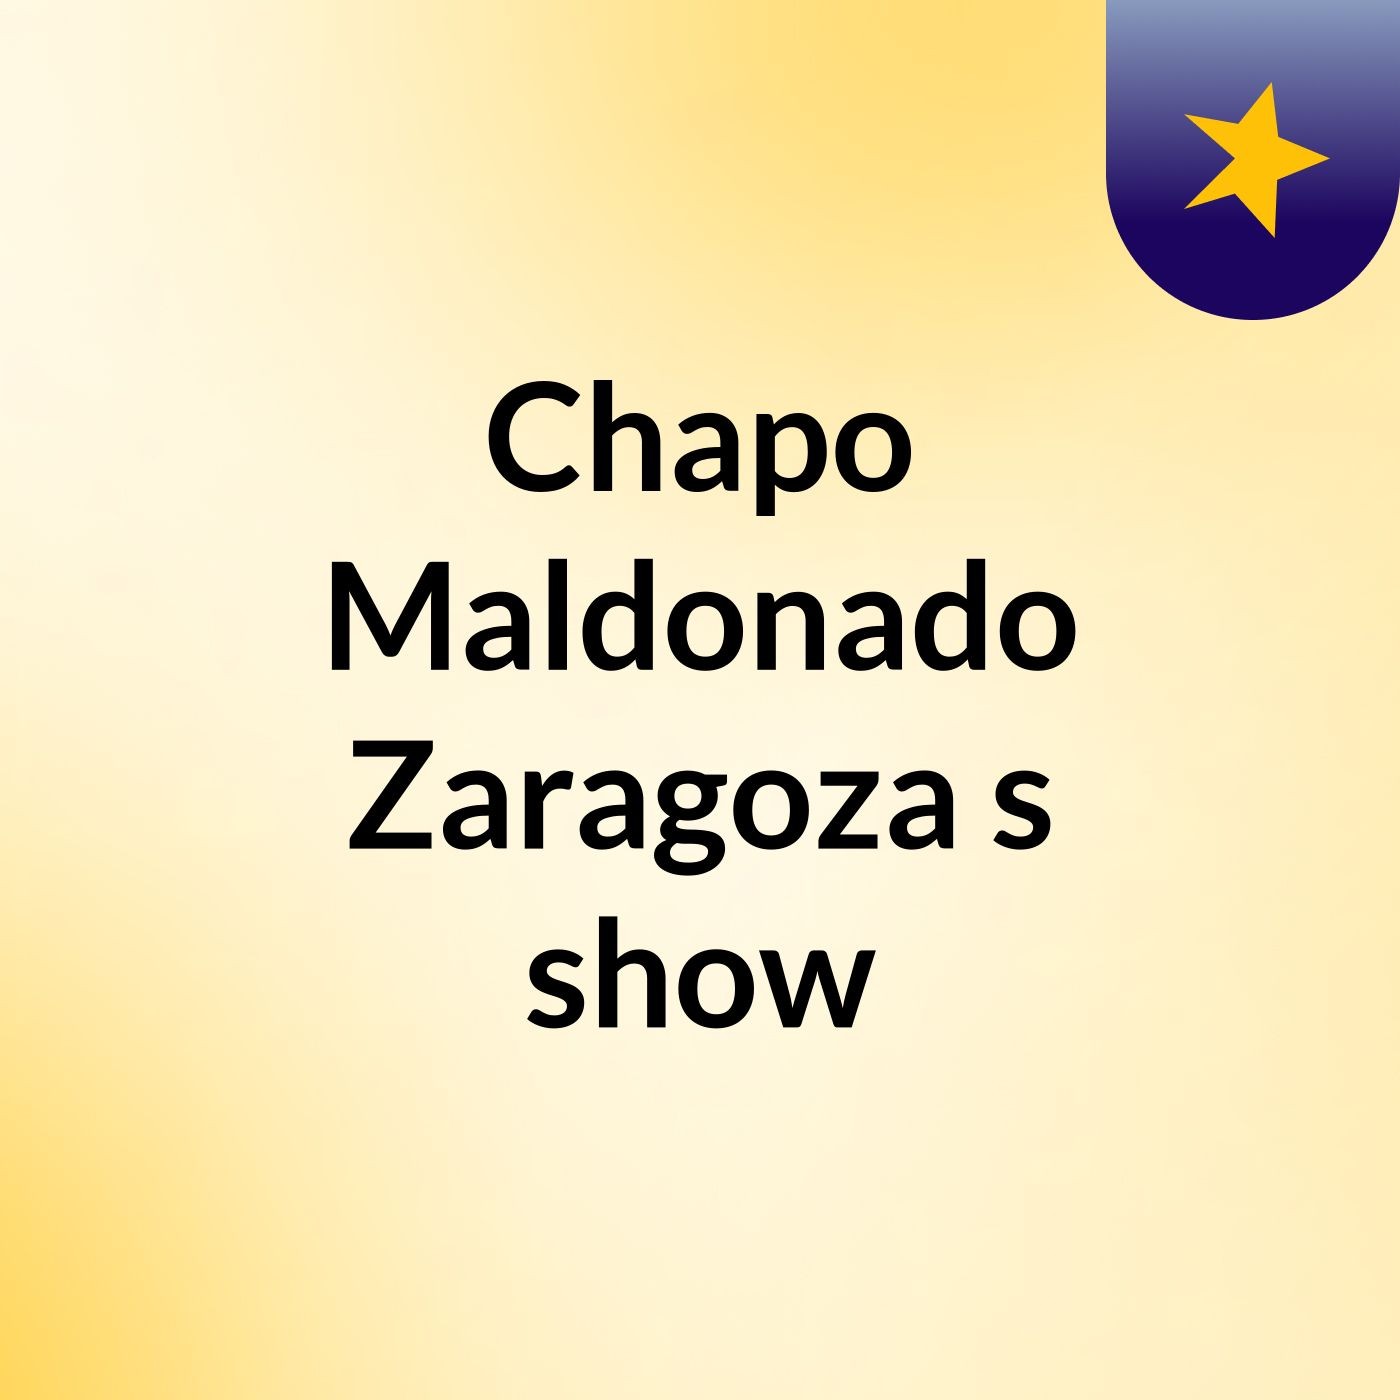 Chapo Maldonado Zaragoza's show